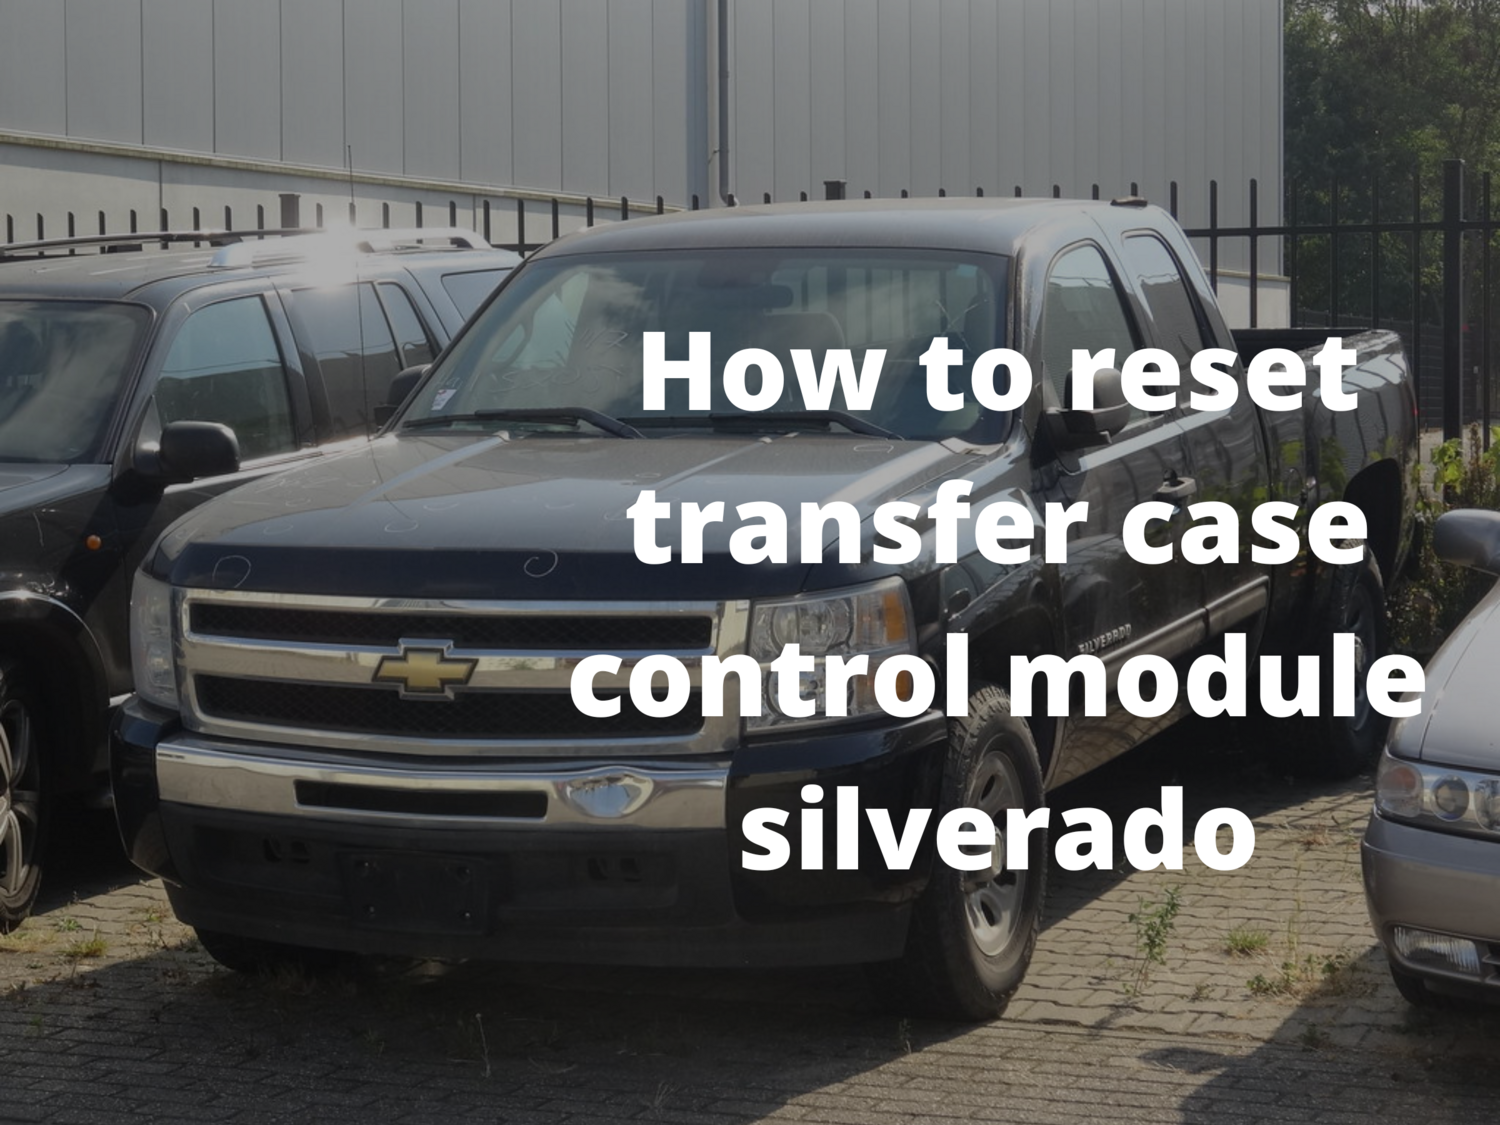 How to reset transfer case control module silverado